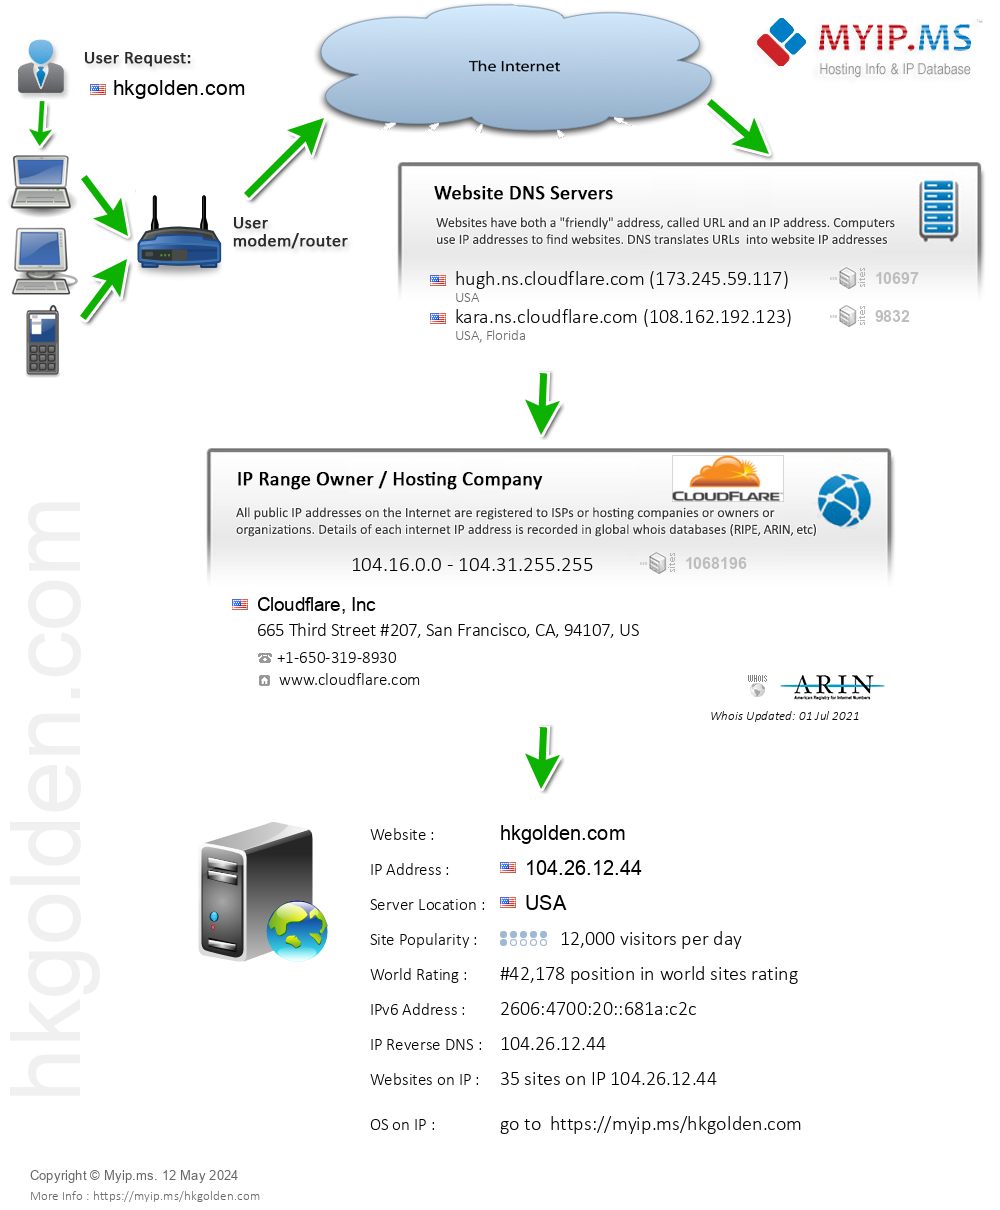 Hkgolden.com - Website Hosting Visual IP Diagram